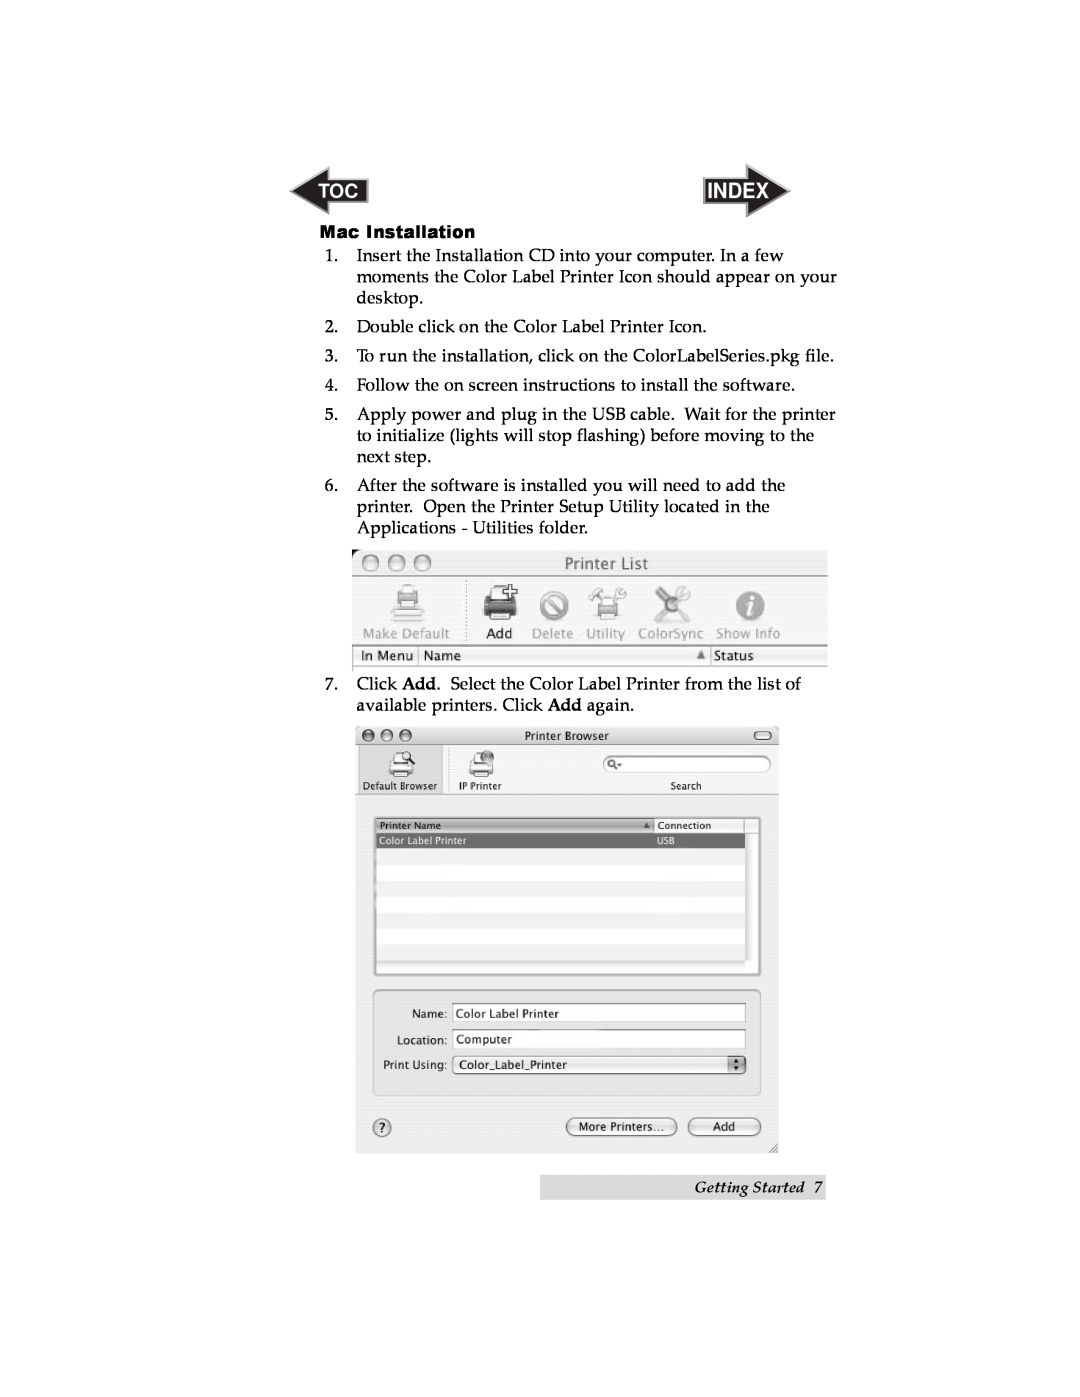 Primera Technology LX800 user manual Index, Mac Installation 